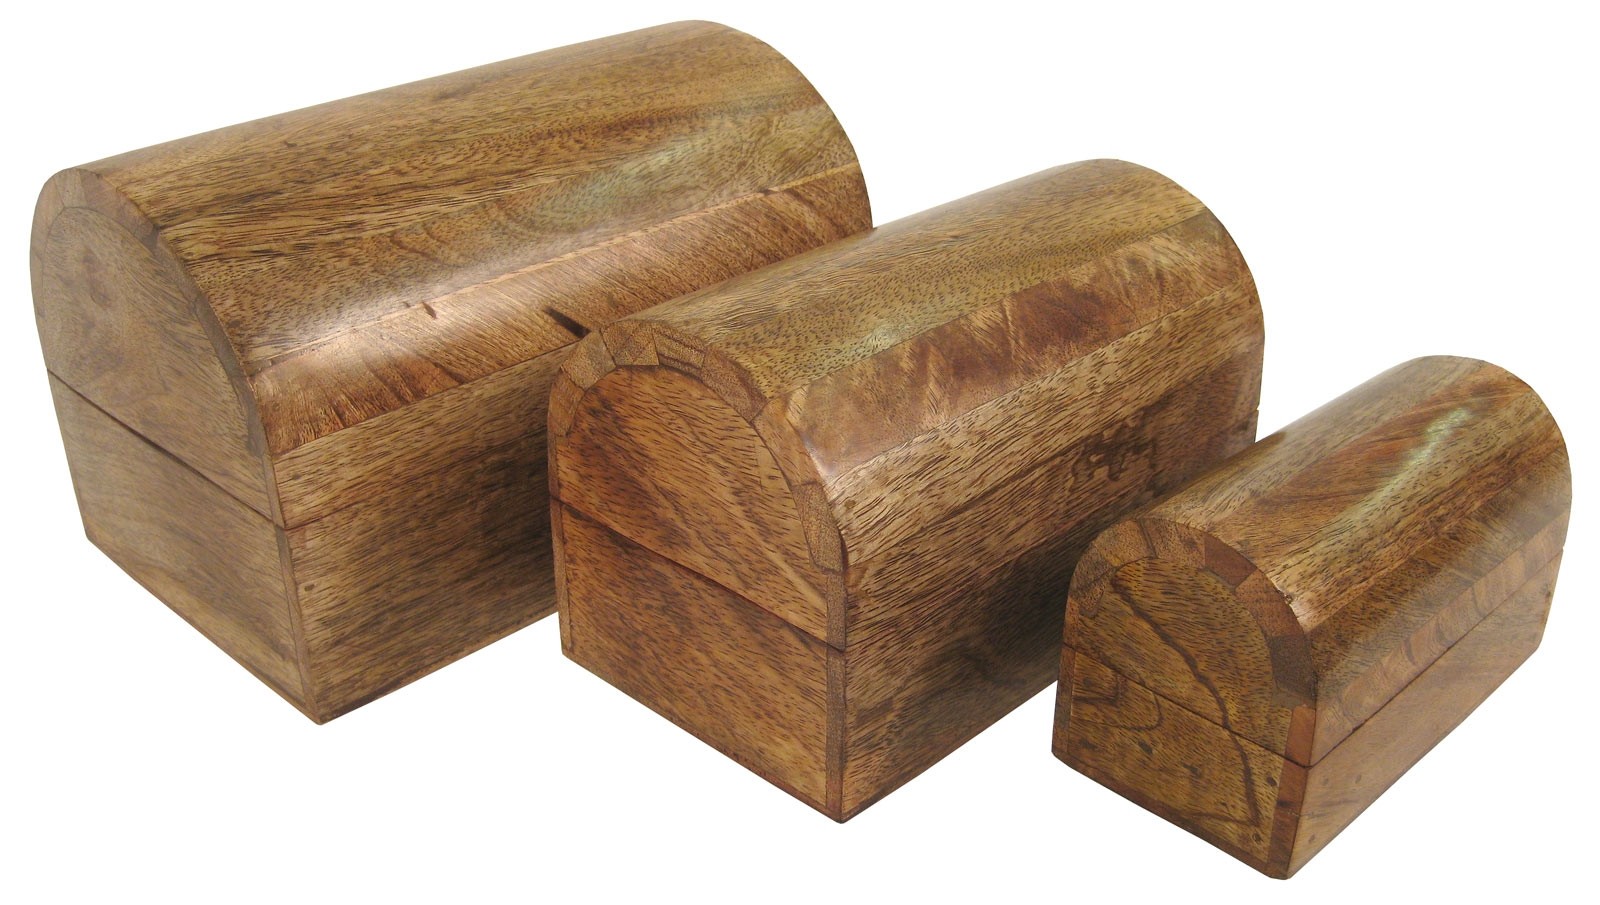 Mango Wood Domed Jewellery/Trinket Boxes - Set/3